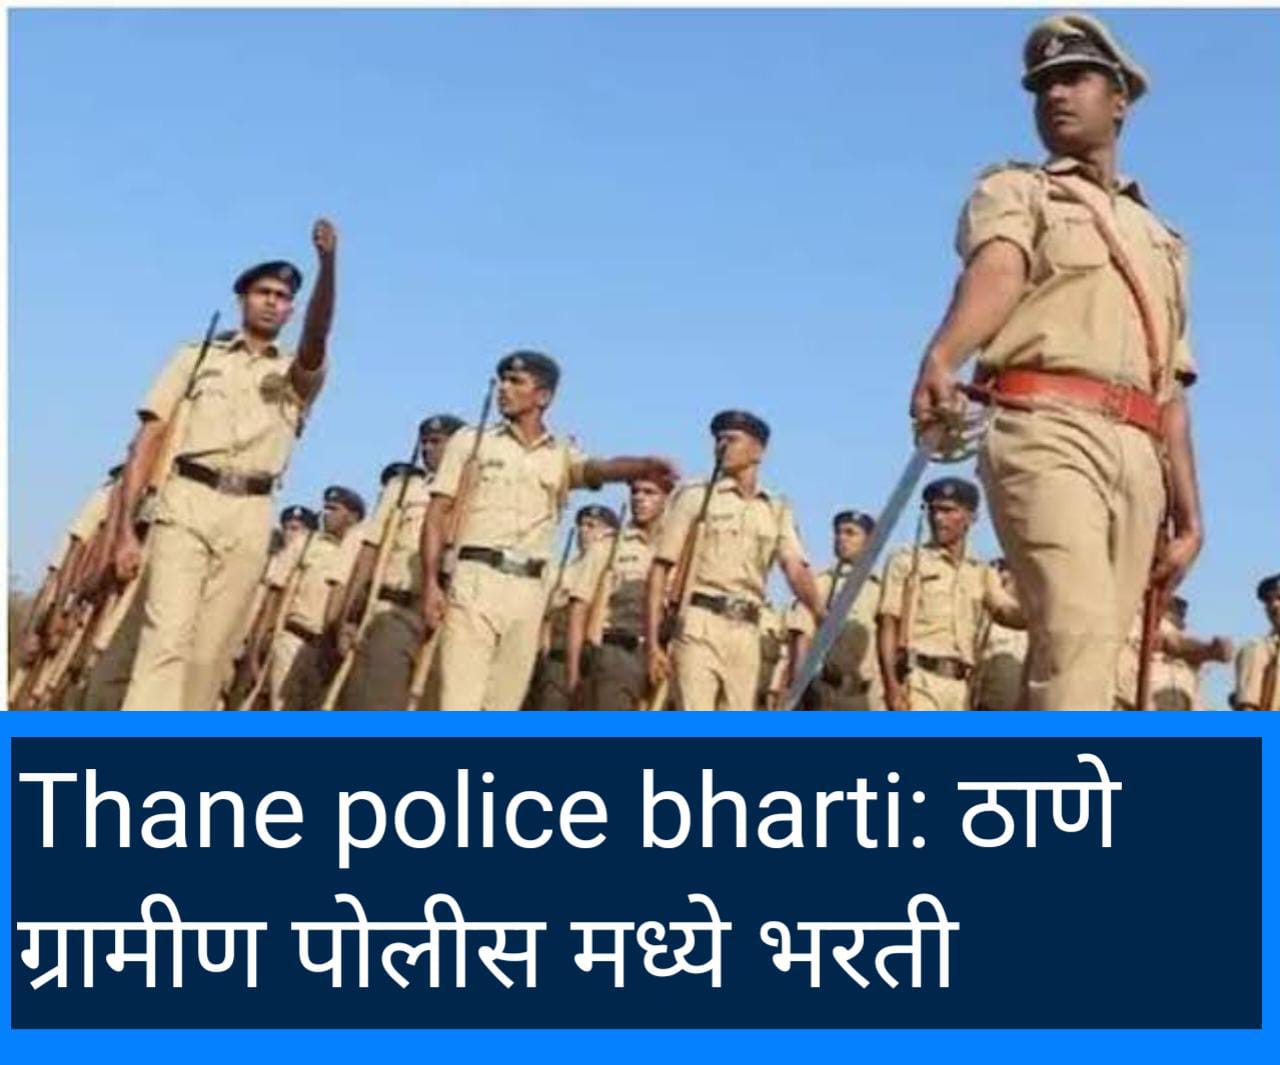 Thane police bharti